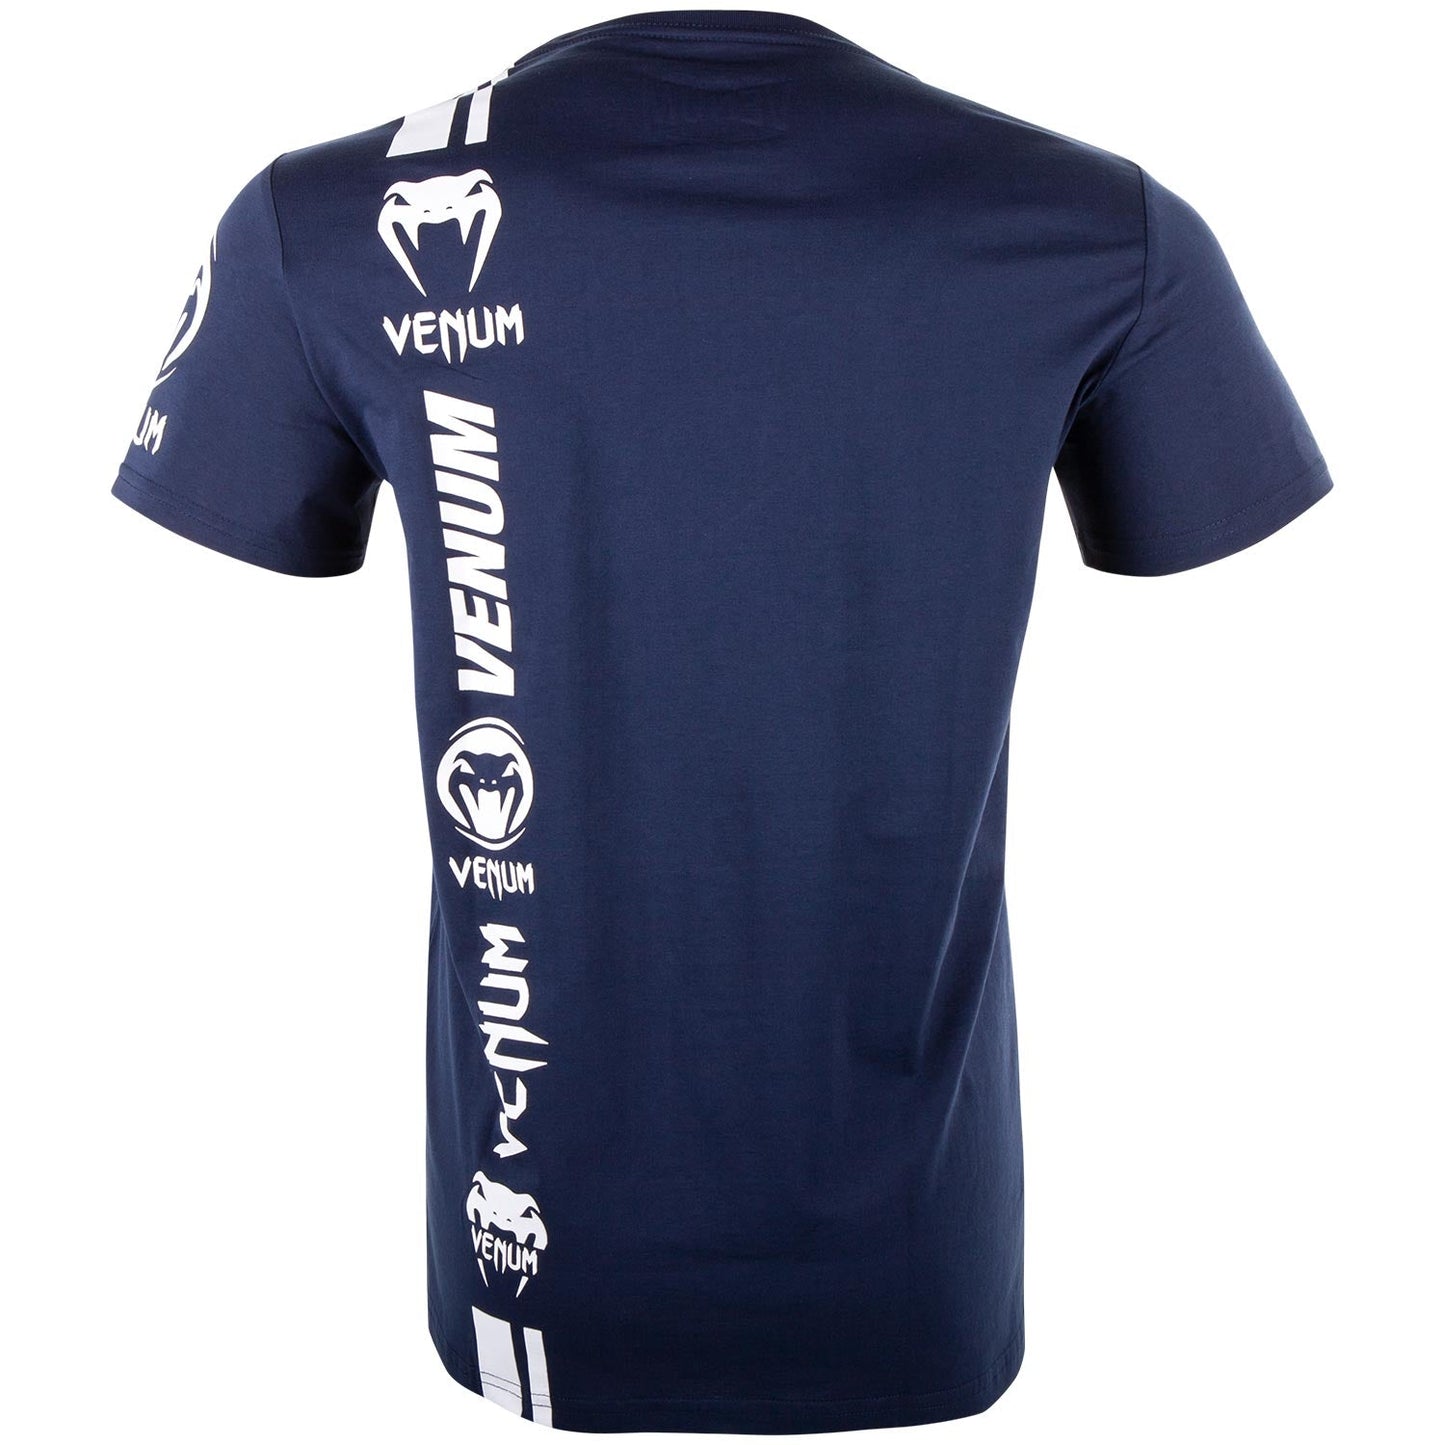 Venum Logos T-shirt - Navy Blue/White